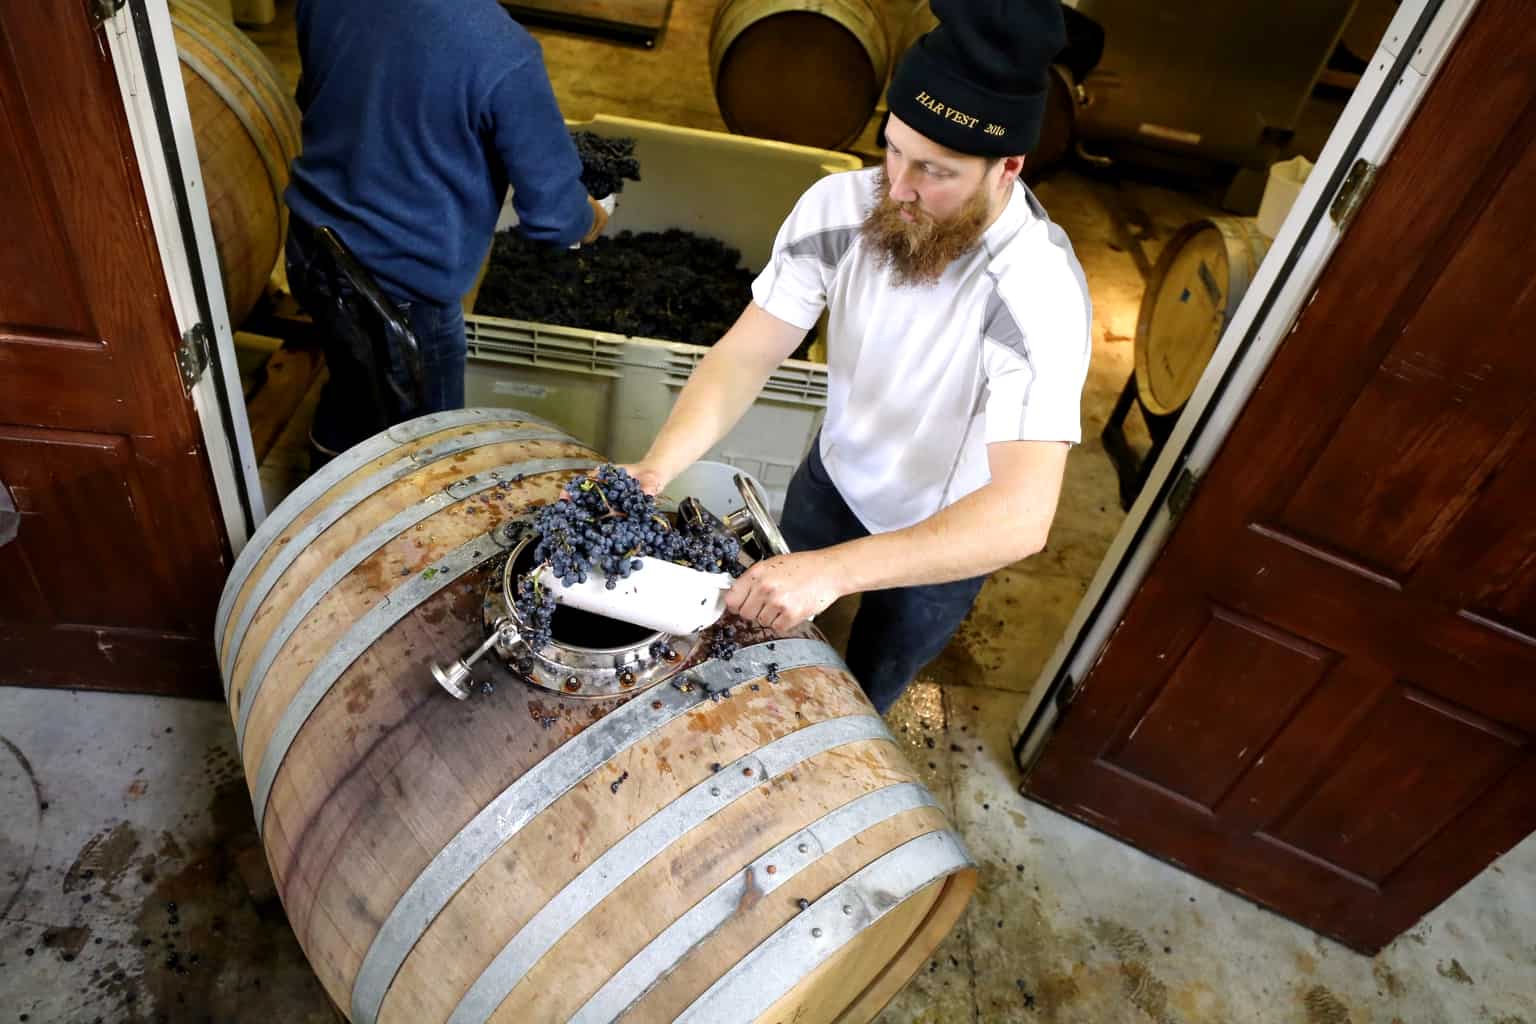 Rotator barrel winemaking with Alex Fullerton filling barrel